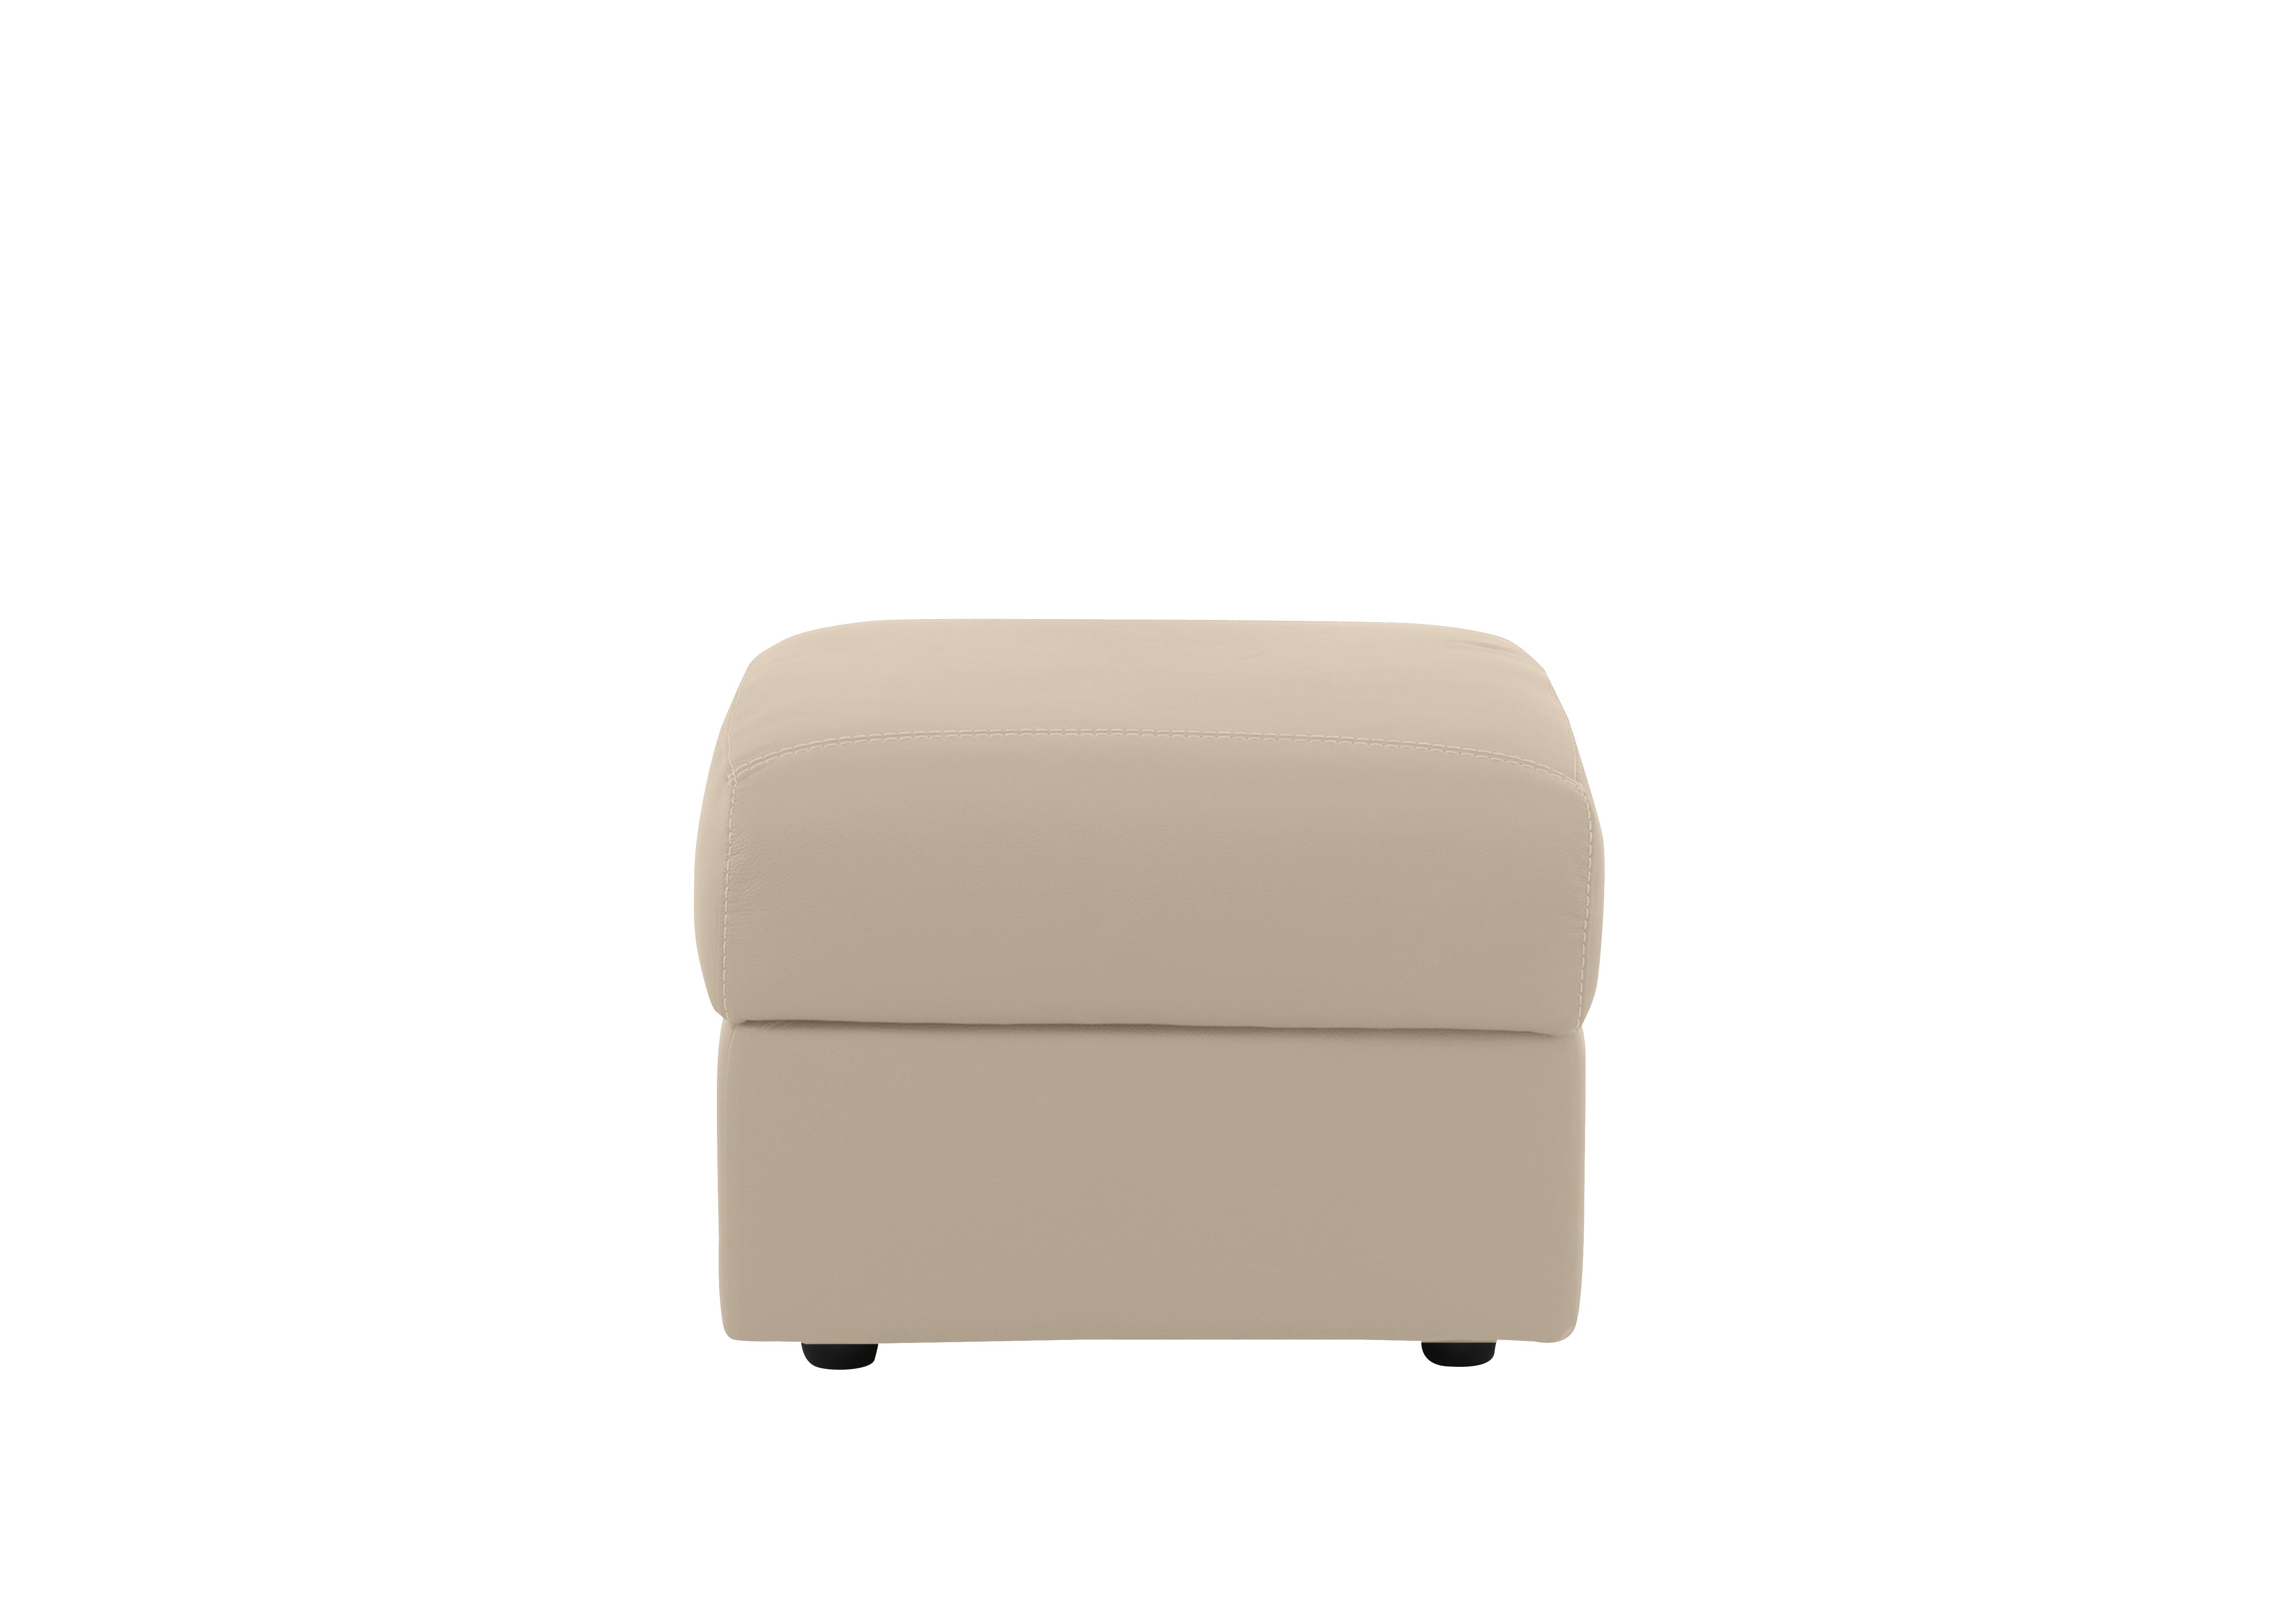 Pepino Leather Storage Footstool in 352 Torello Fango on Furniture Village